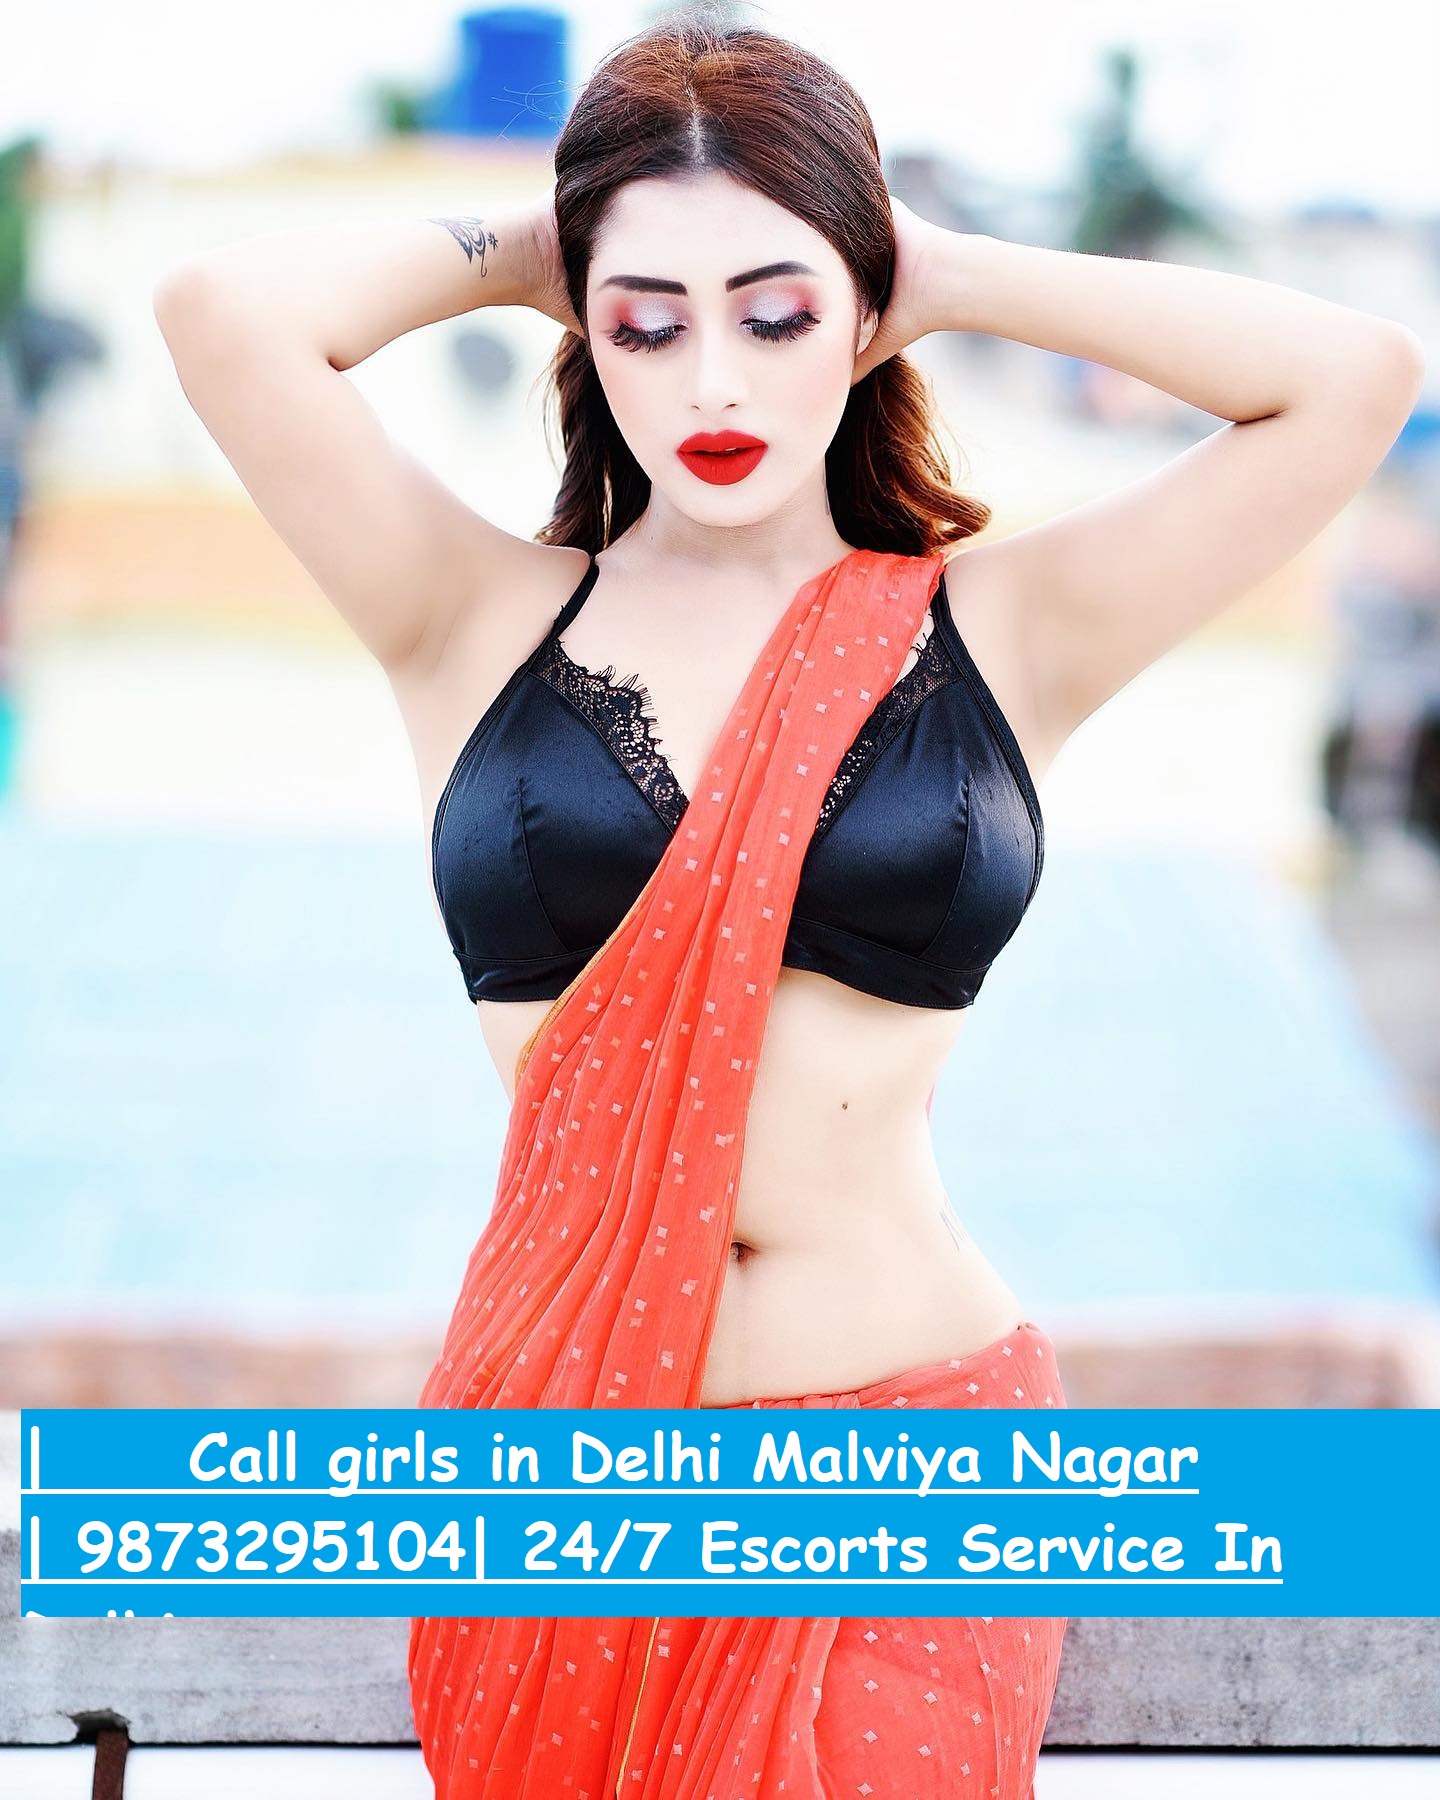 Call girl in Gurgaon - name